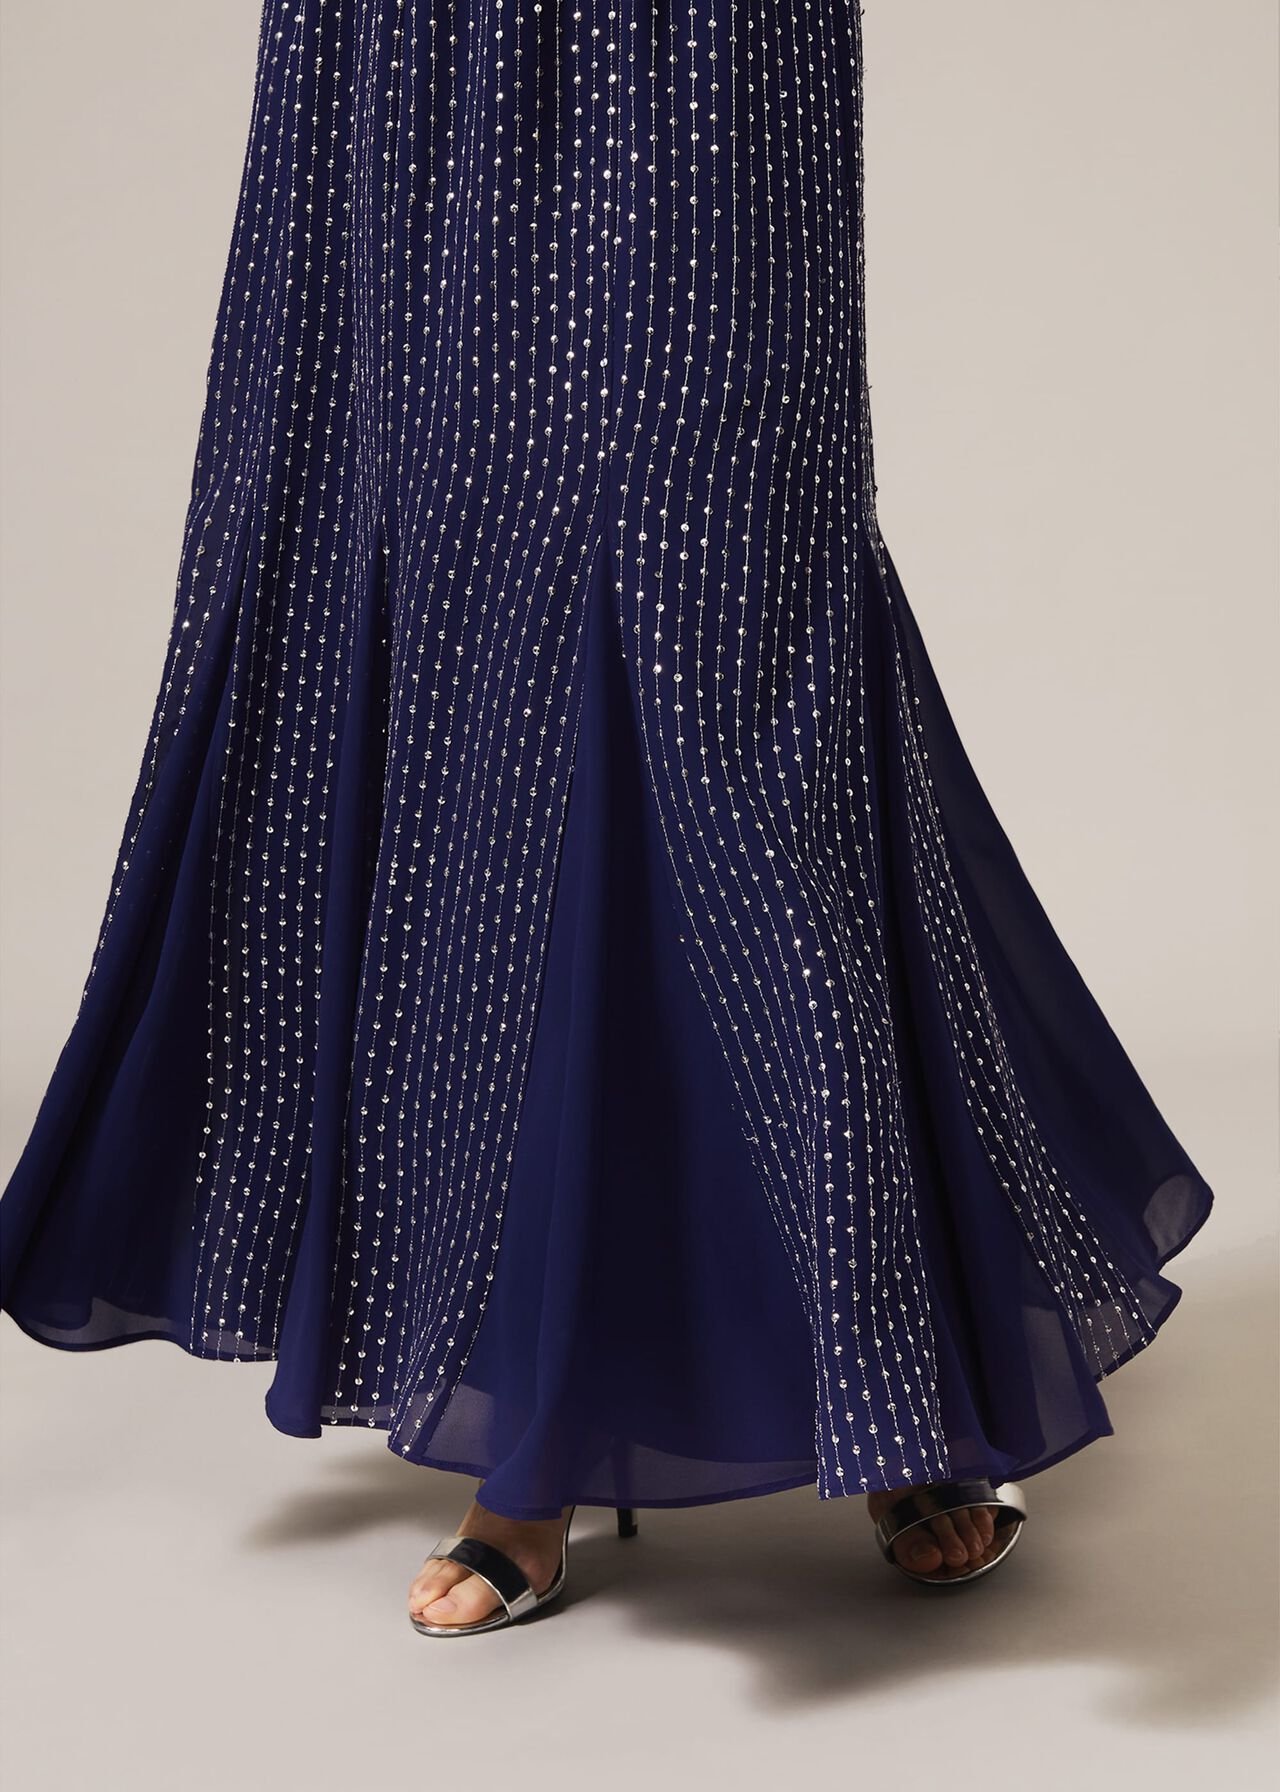 Pippa Embellished Blouson Dress